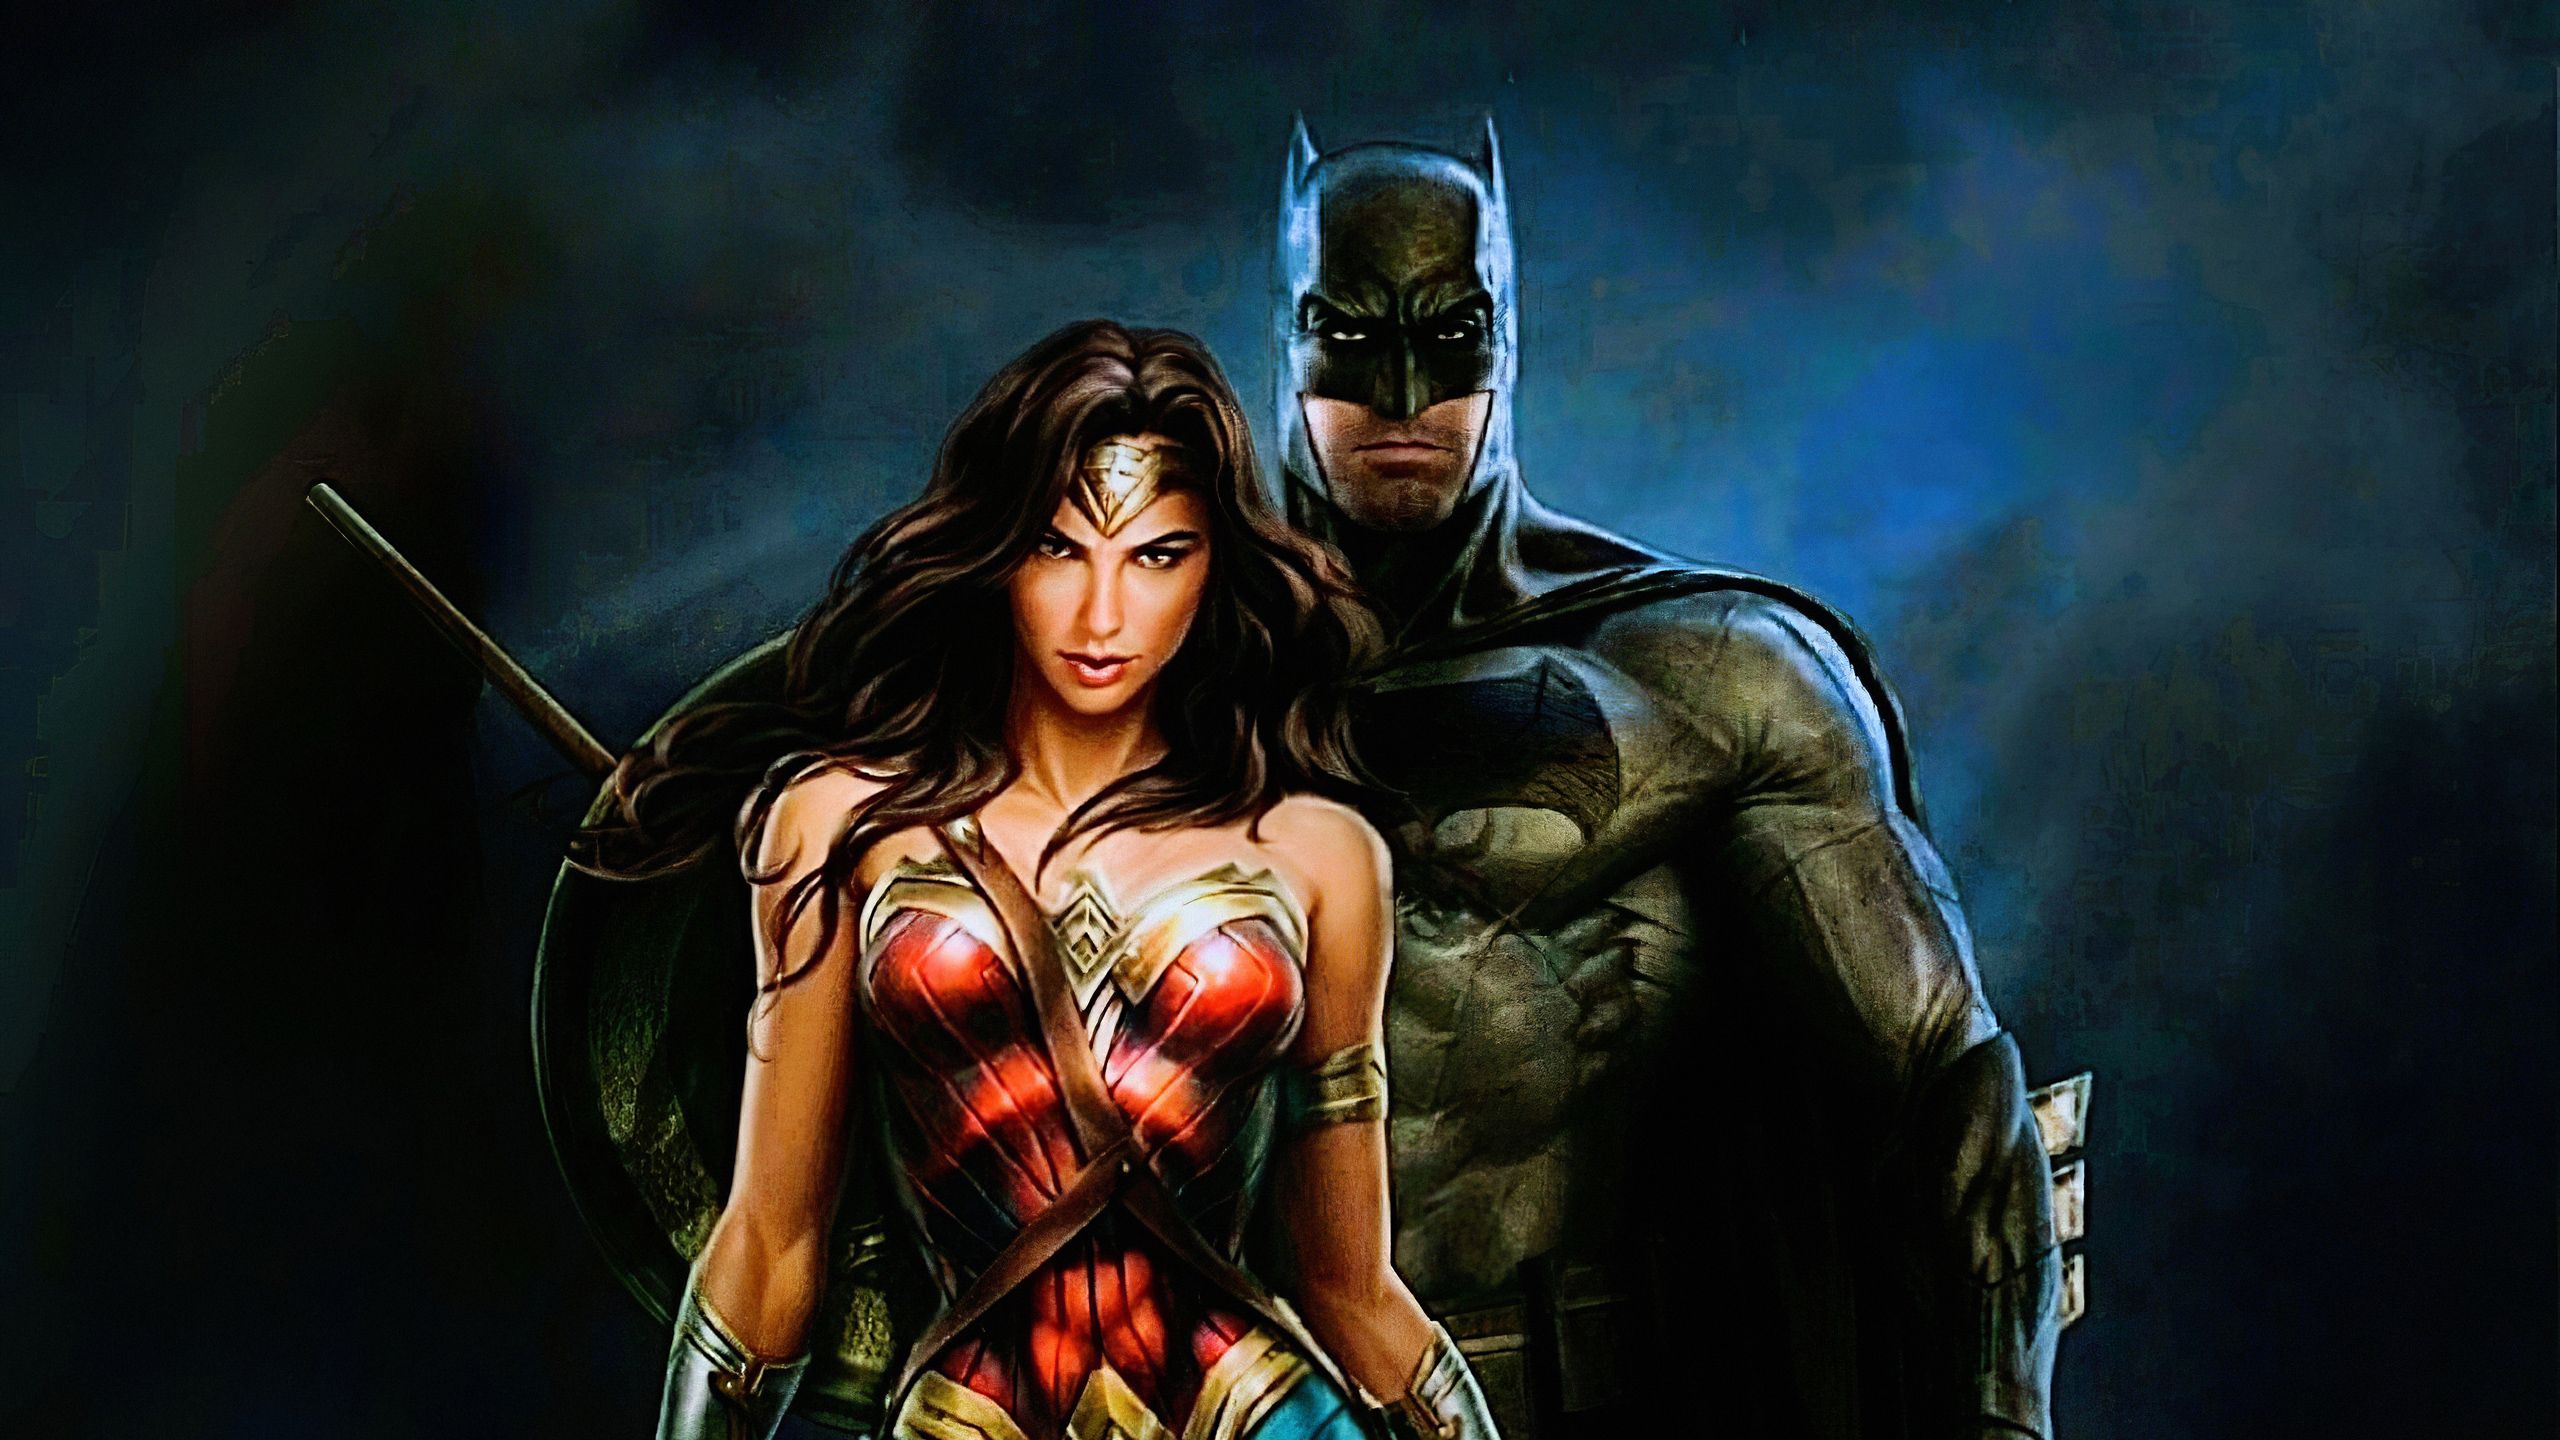 Batman Wonder Woman Art, HD Superheroes, 4k Wallpaper, Image, Background, Photo and Picture